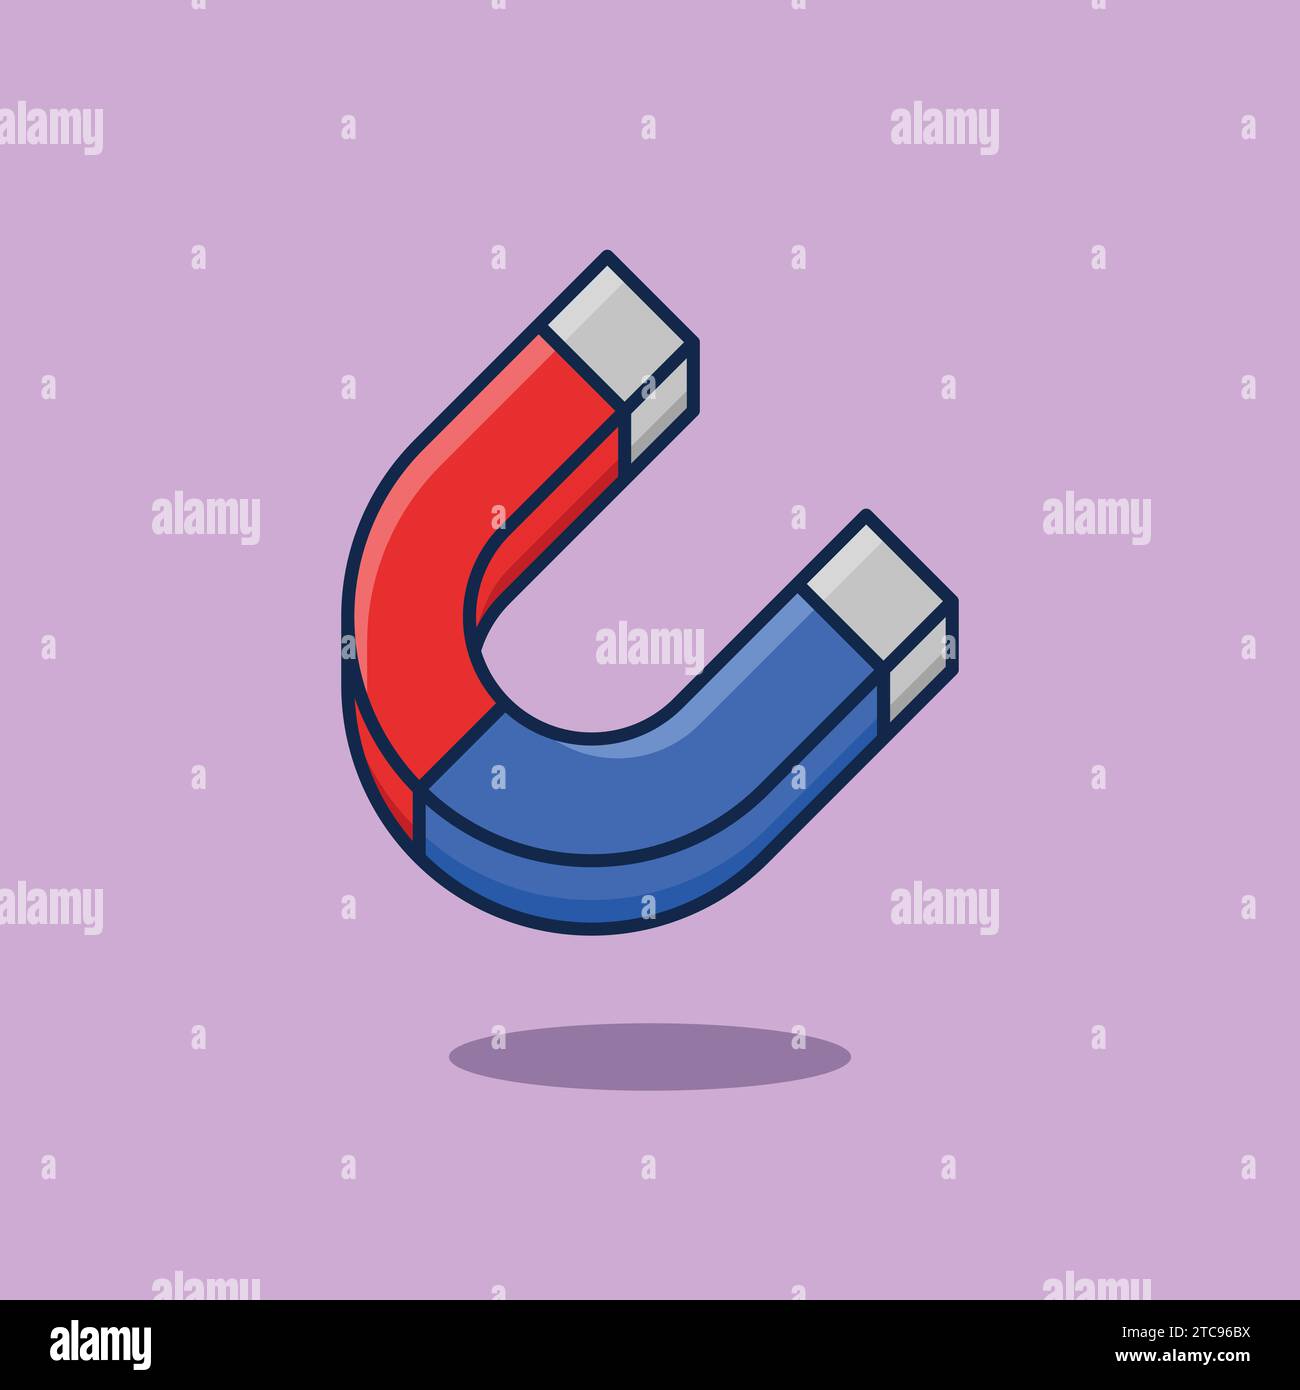 Magnet-Illustration Vektor-Symbol mit roten und blauen Polen Stock Vektor